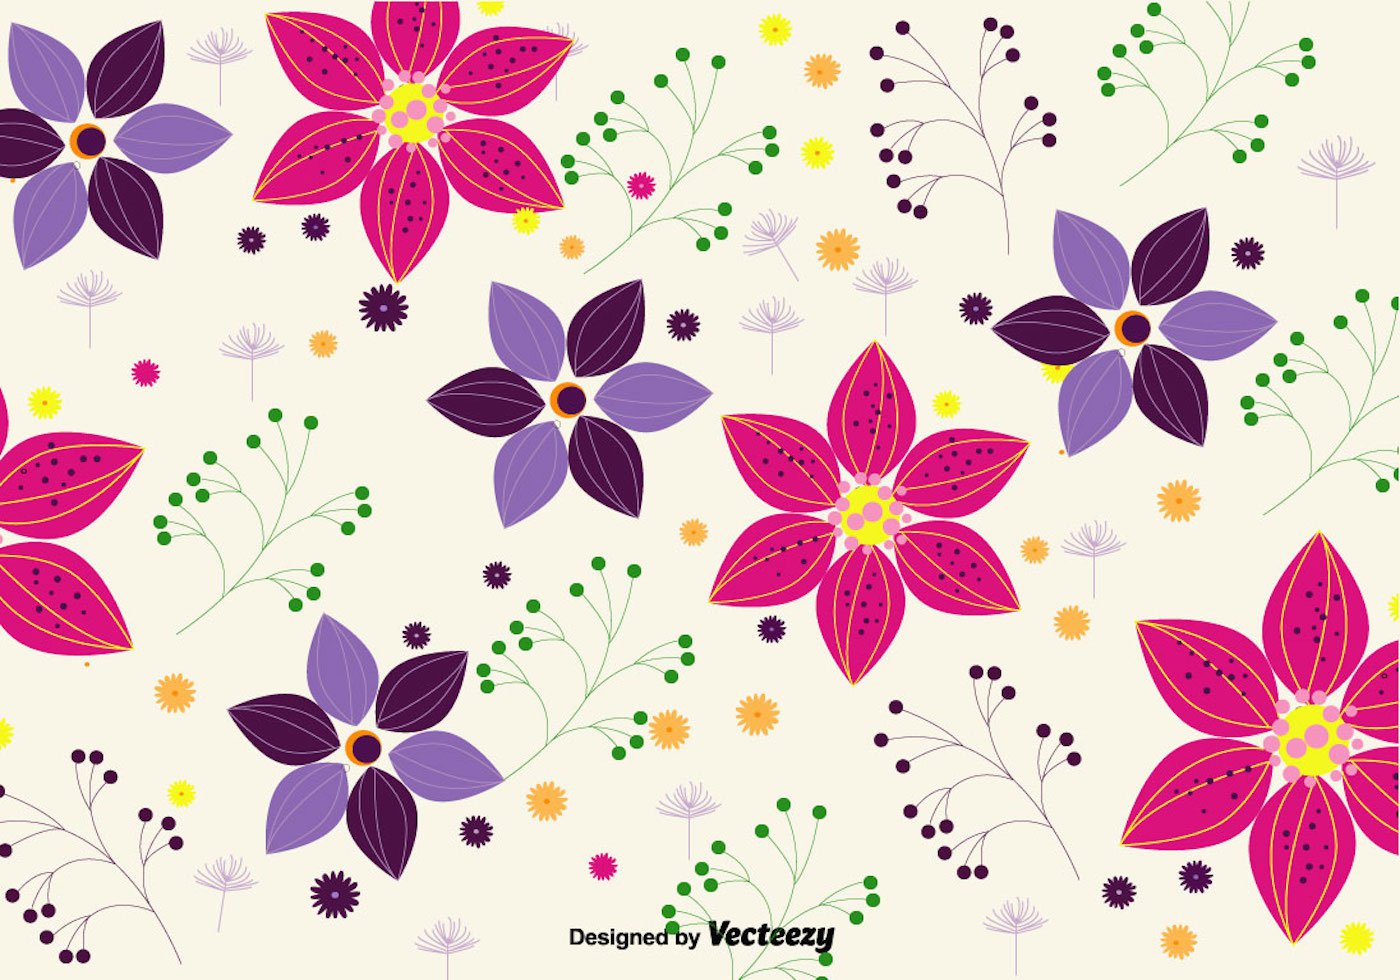 Green Flower Background Free Vector Art - (14716 Free Downloads)